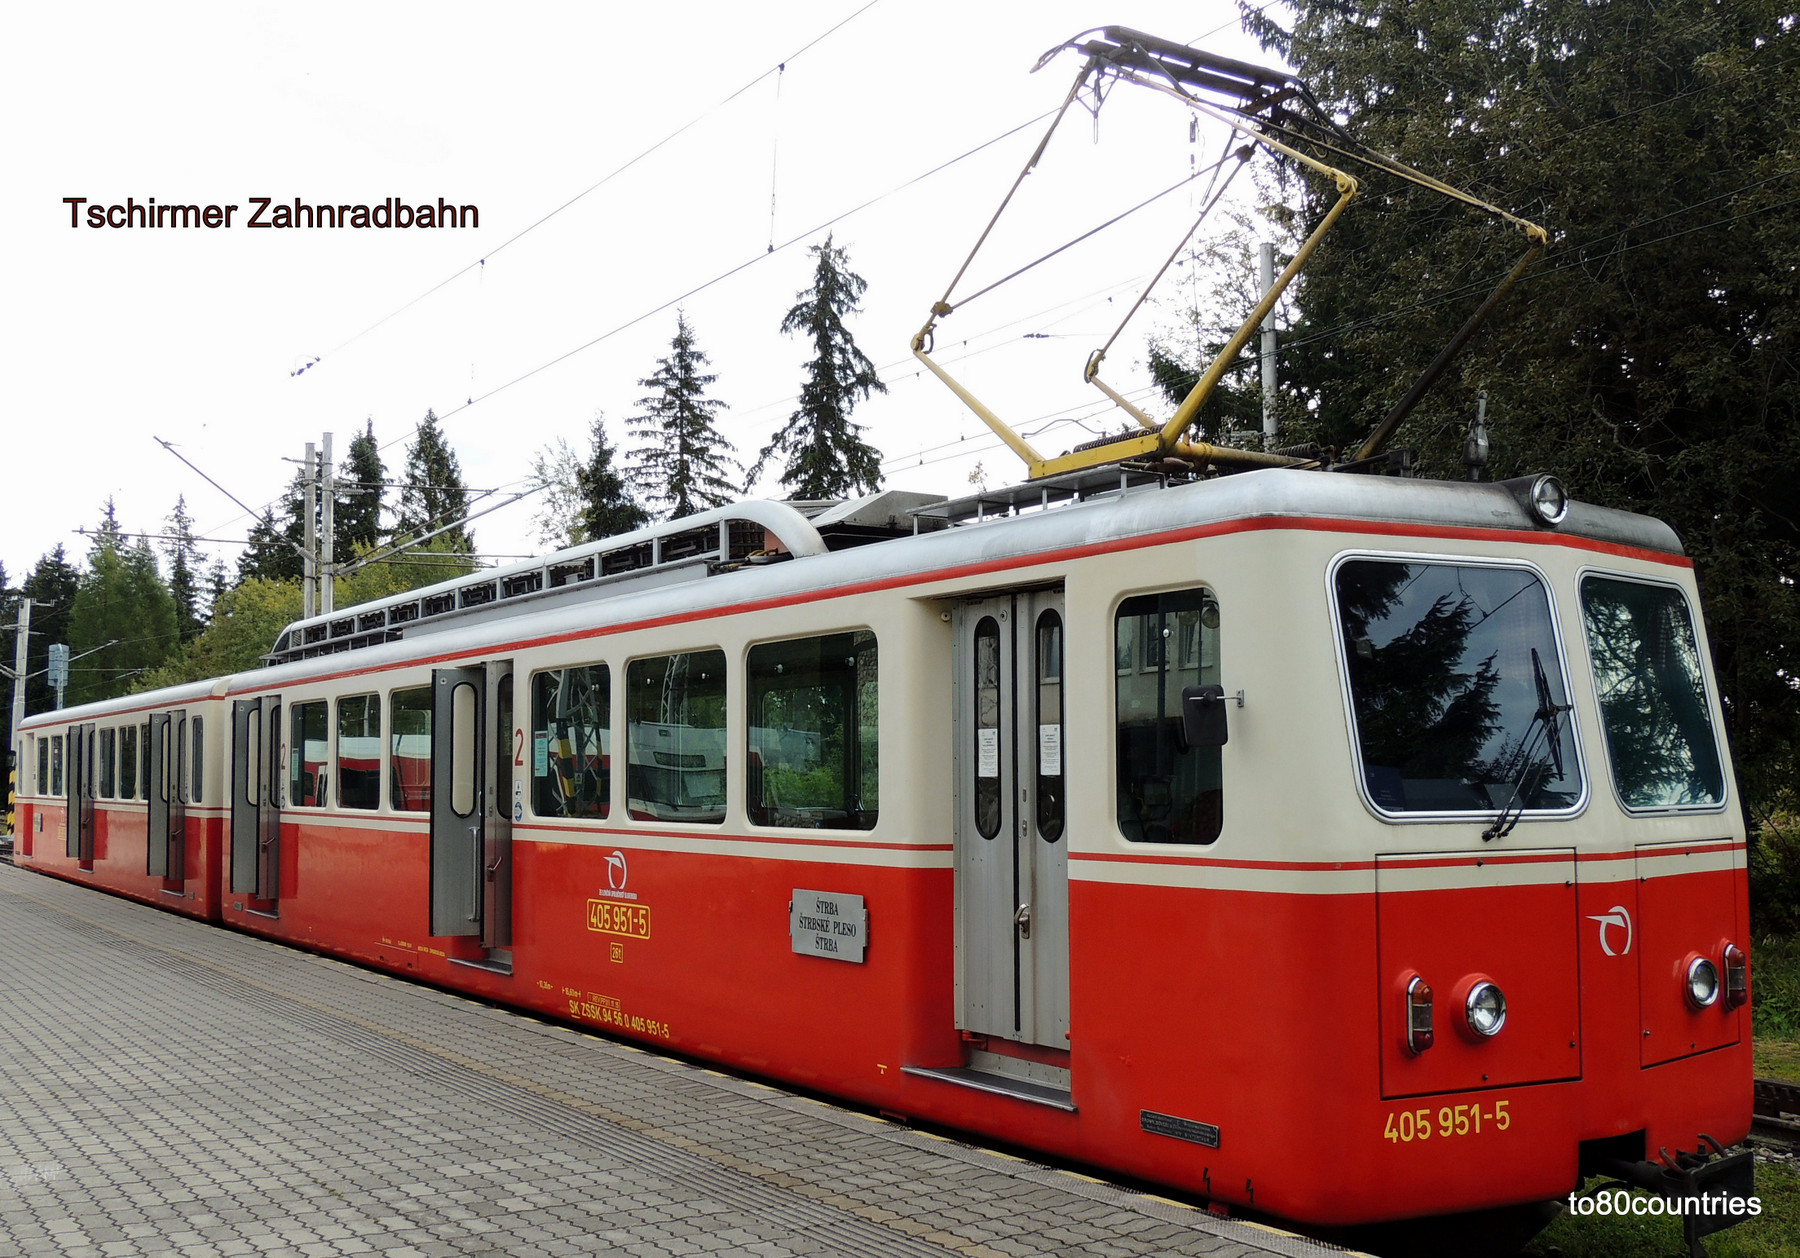 Tschirmer Zahnradbahn - Hohe Tatra